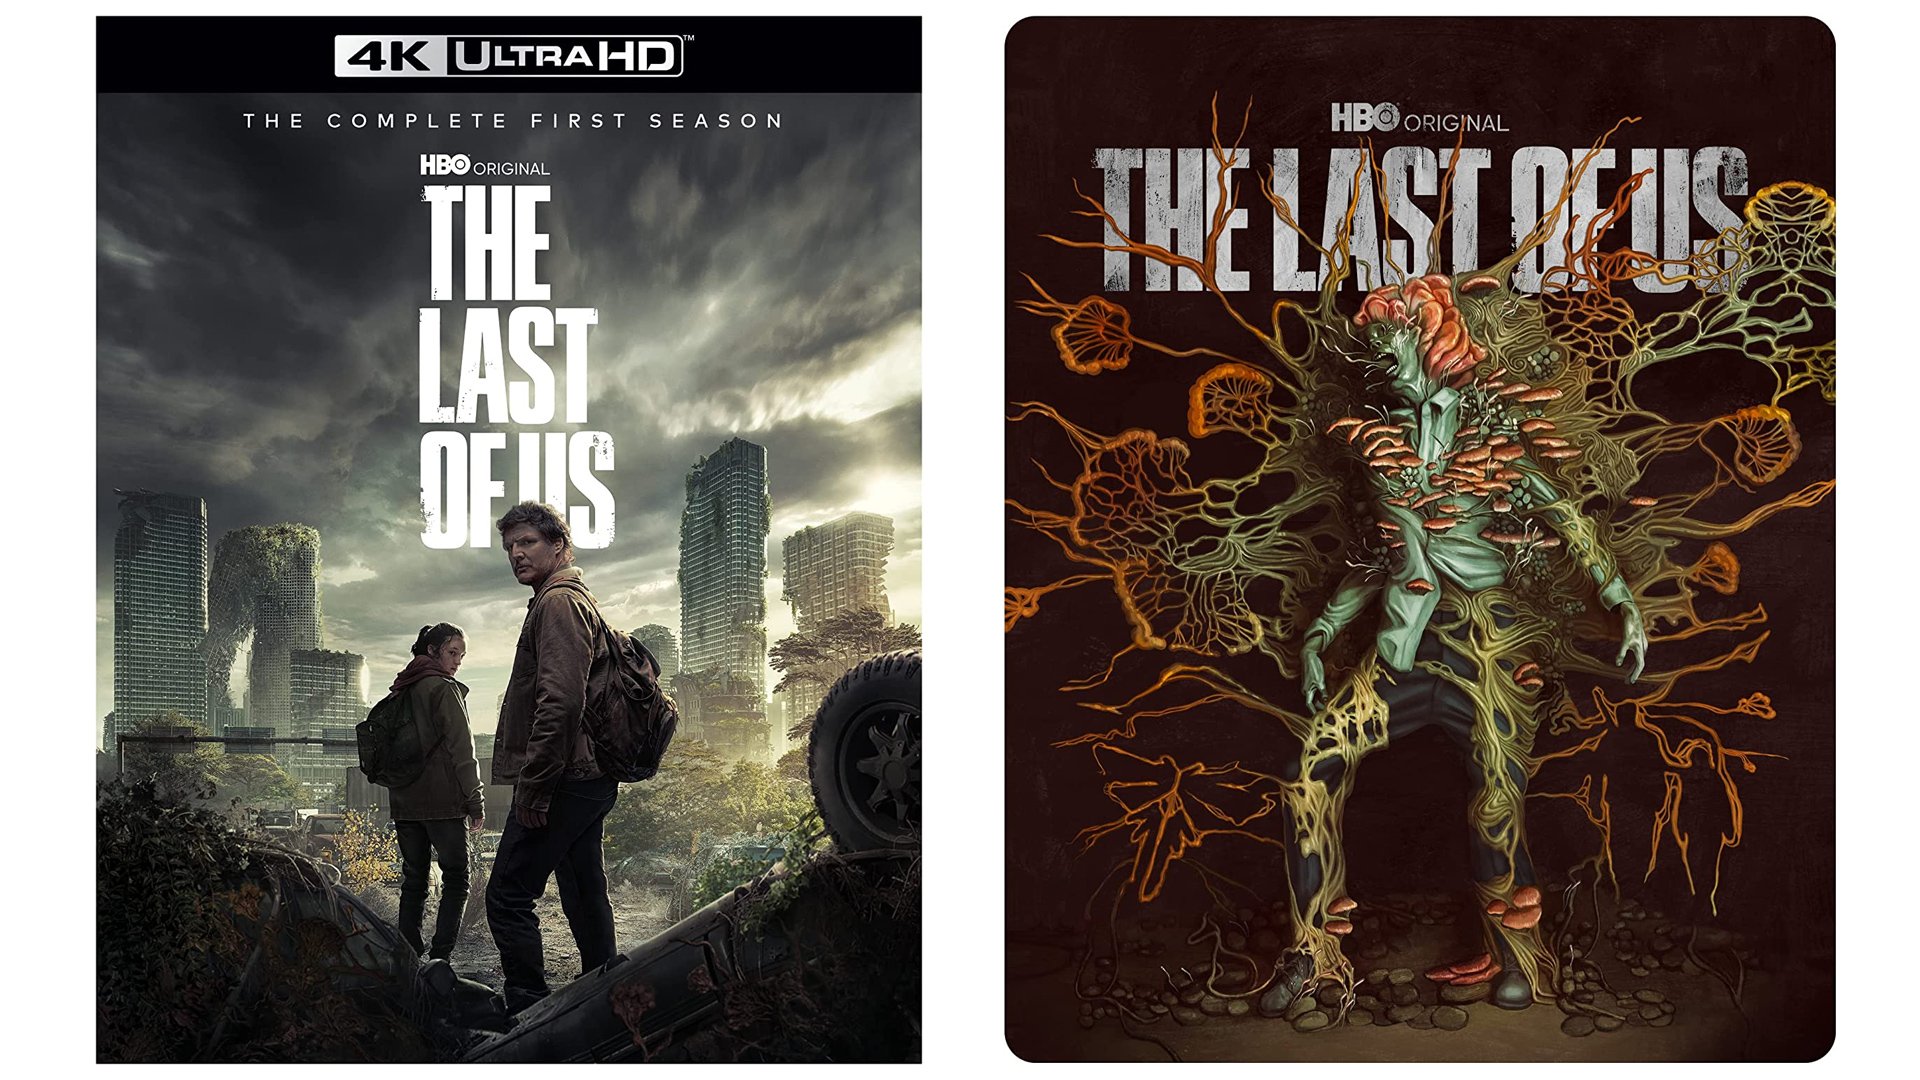 The Creator, UK DVD, Blu-ray, 4K Ultra HD Blu-ray and Steelbook release  details